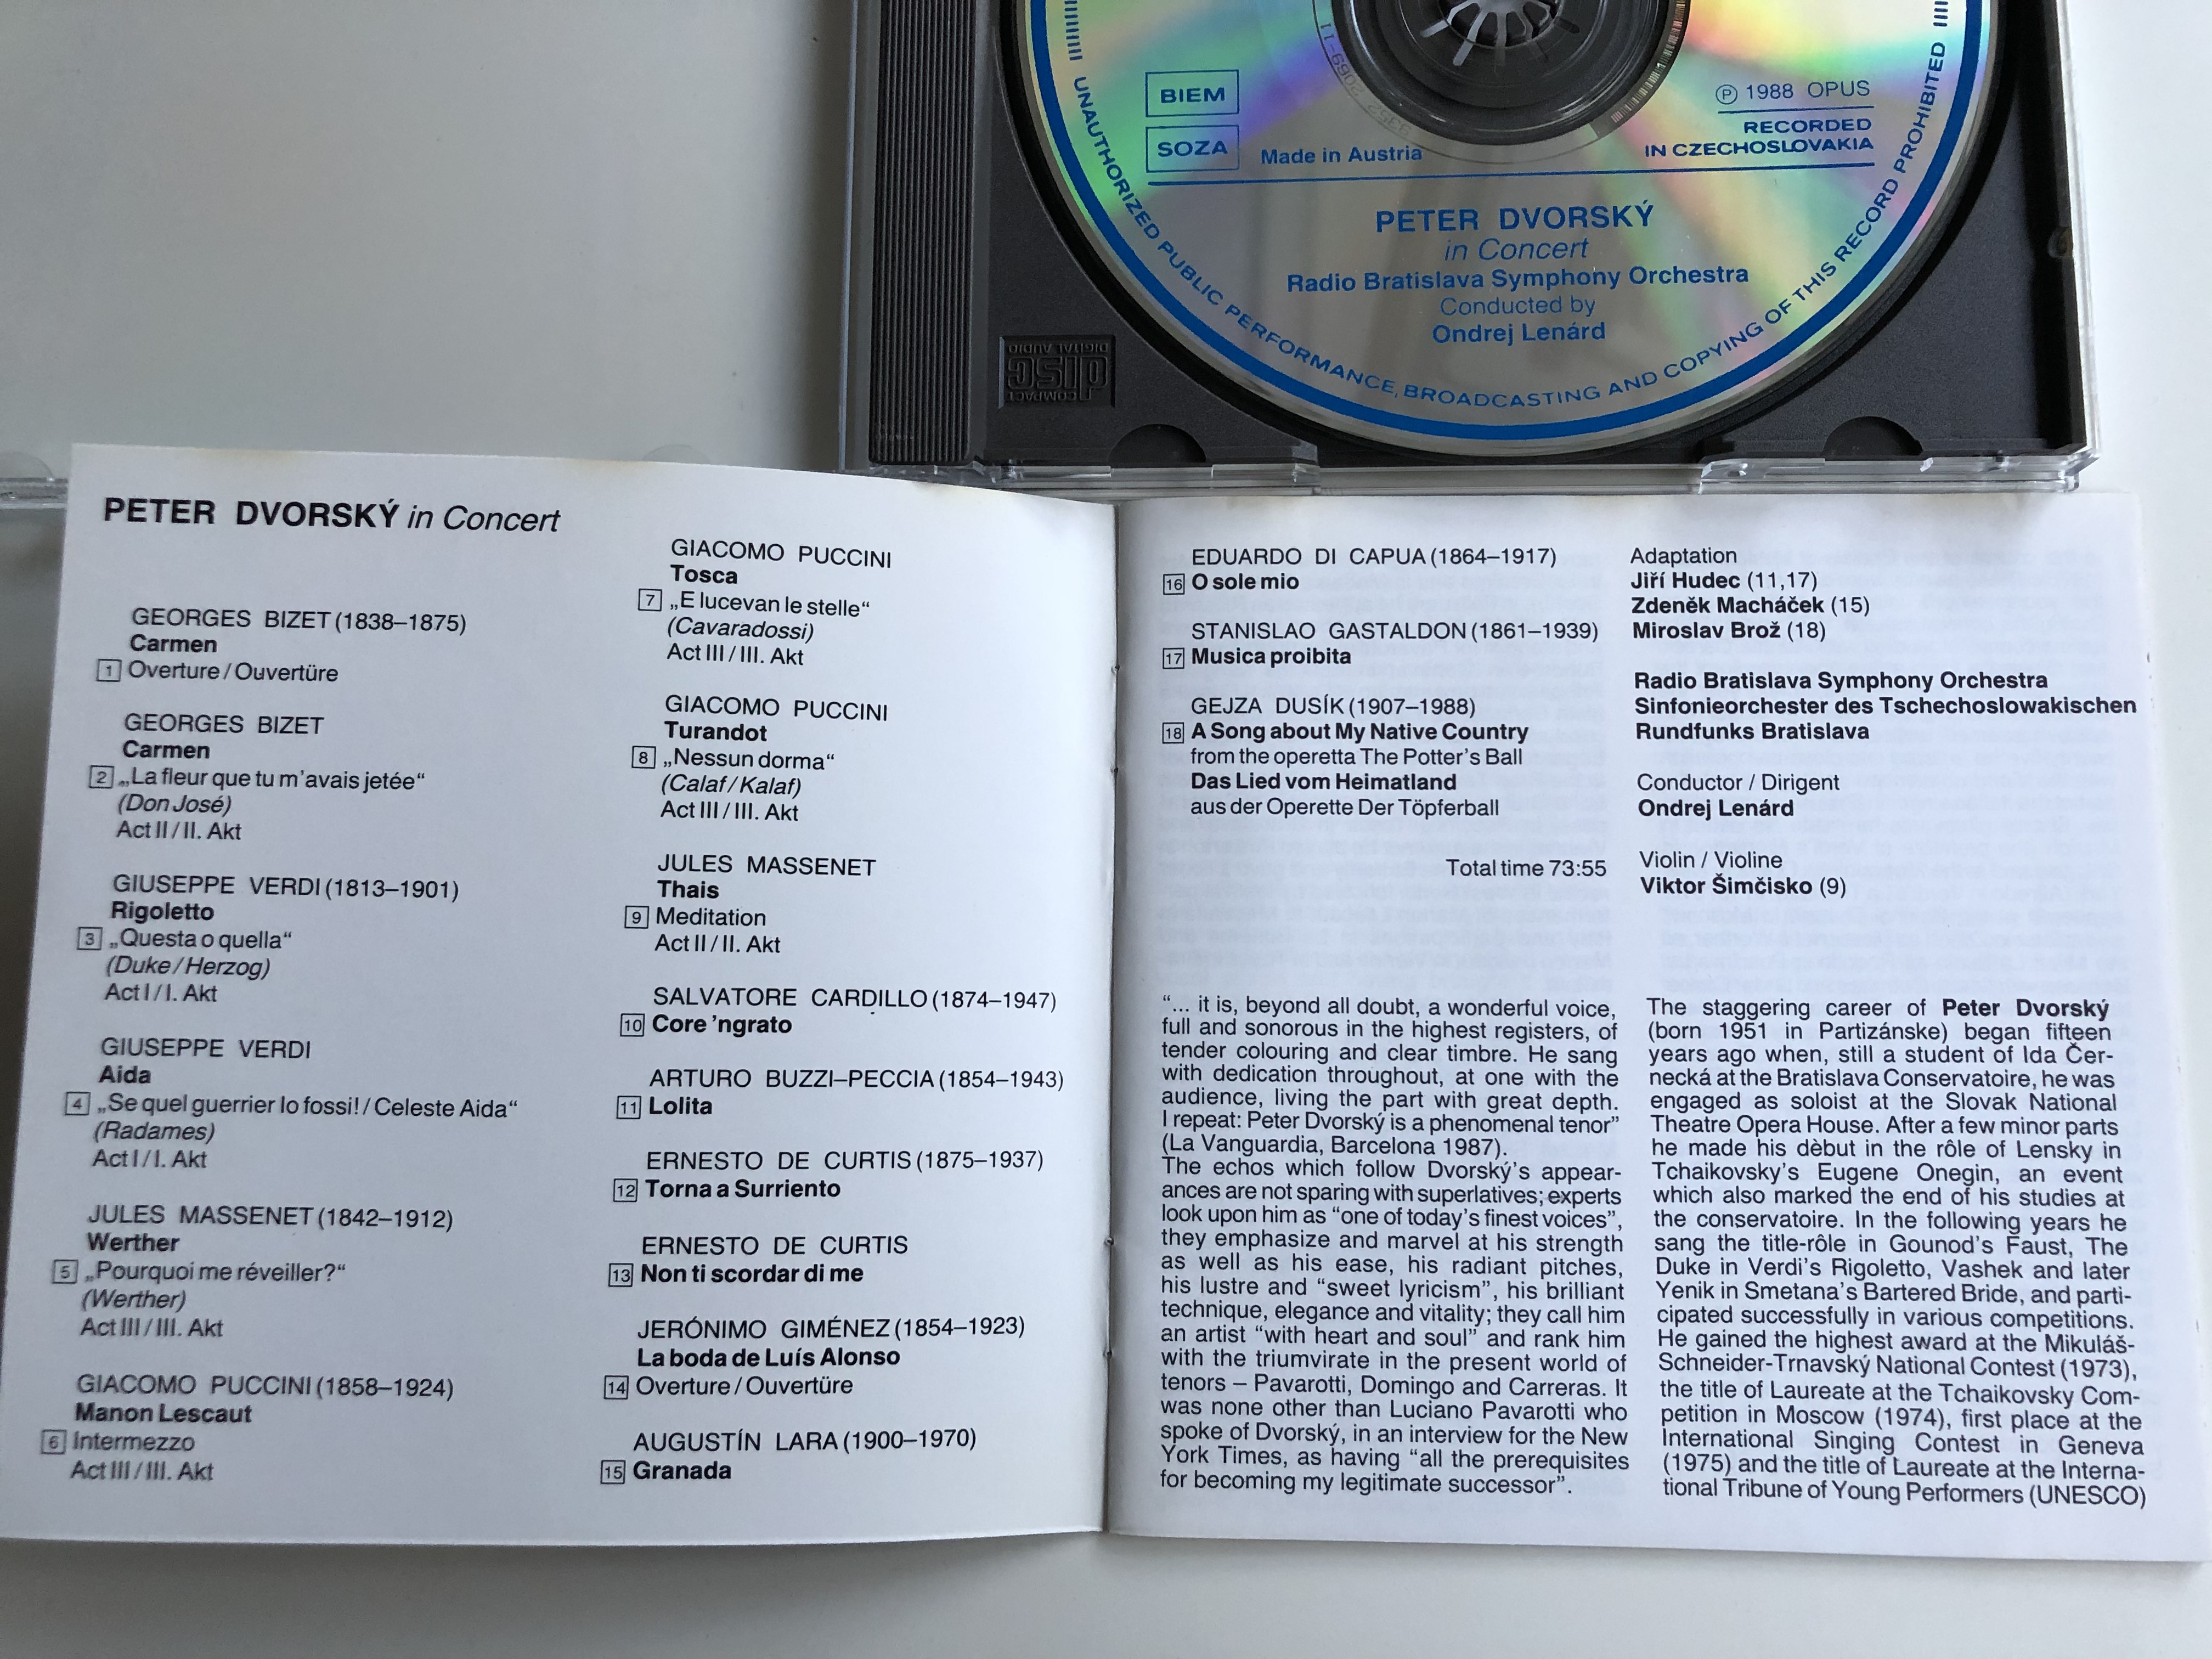 peter-dvorsky-in-concert-radio-bratislava-symphony-orchestra-opus-audio-cd-1988-stereo-9352-2069-3-.jpg